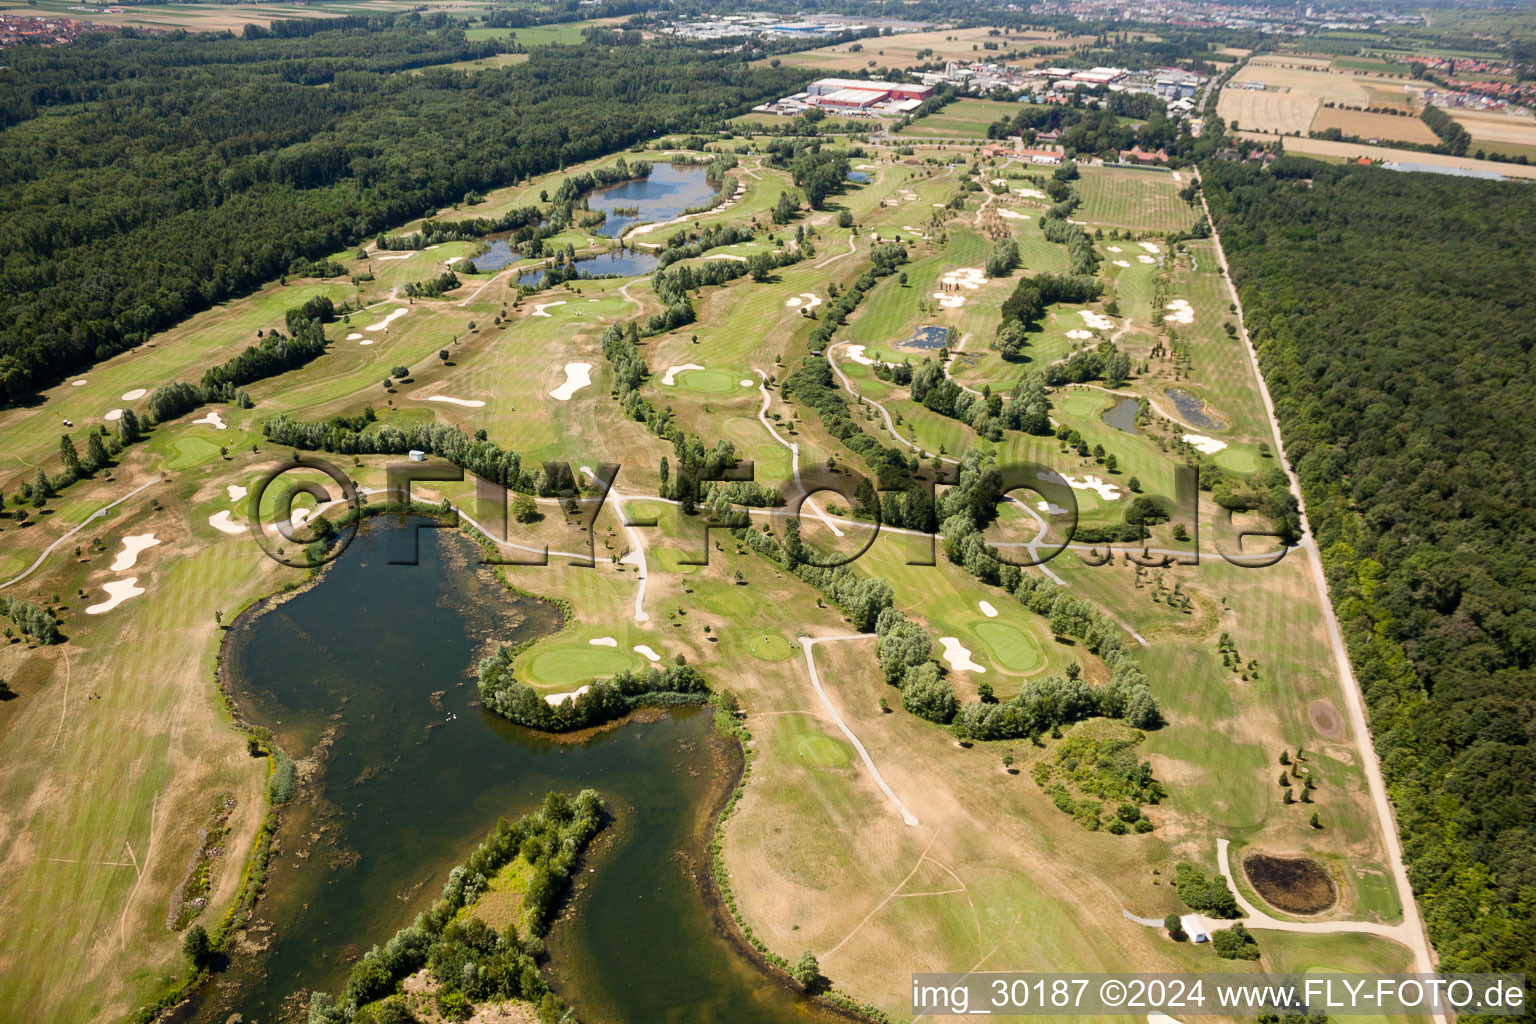 Grounds of the Golf course at Golfanlage Landgut Dreihof in Essingen in the state Rhineland-Palatinate